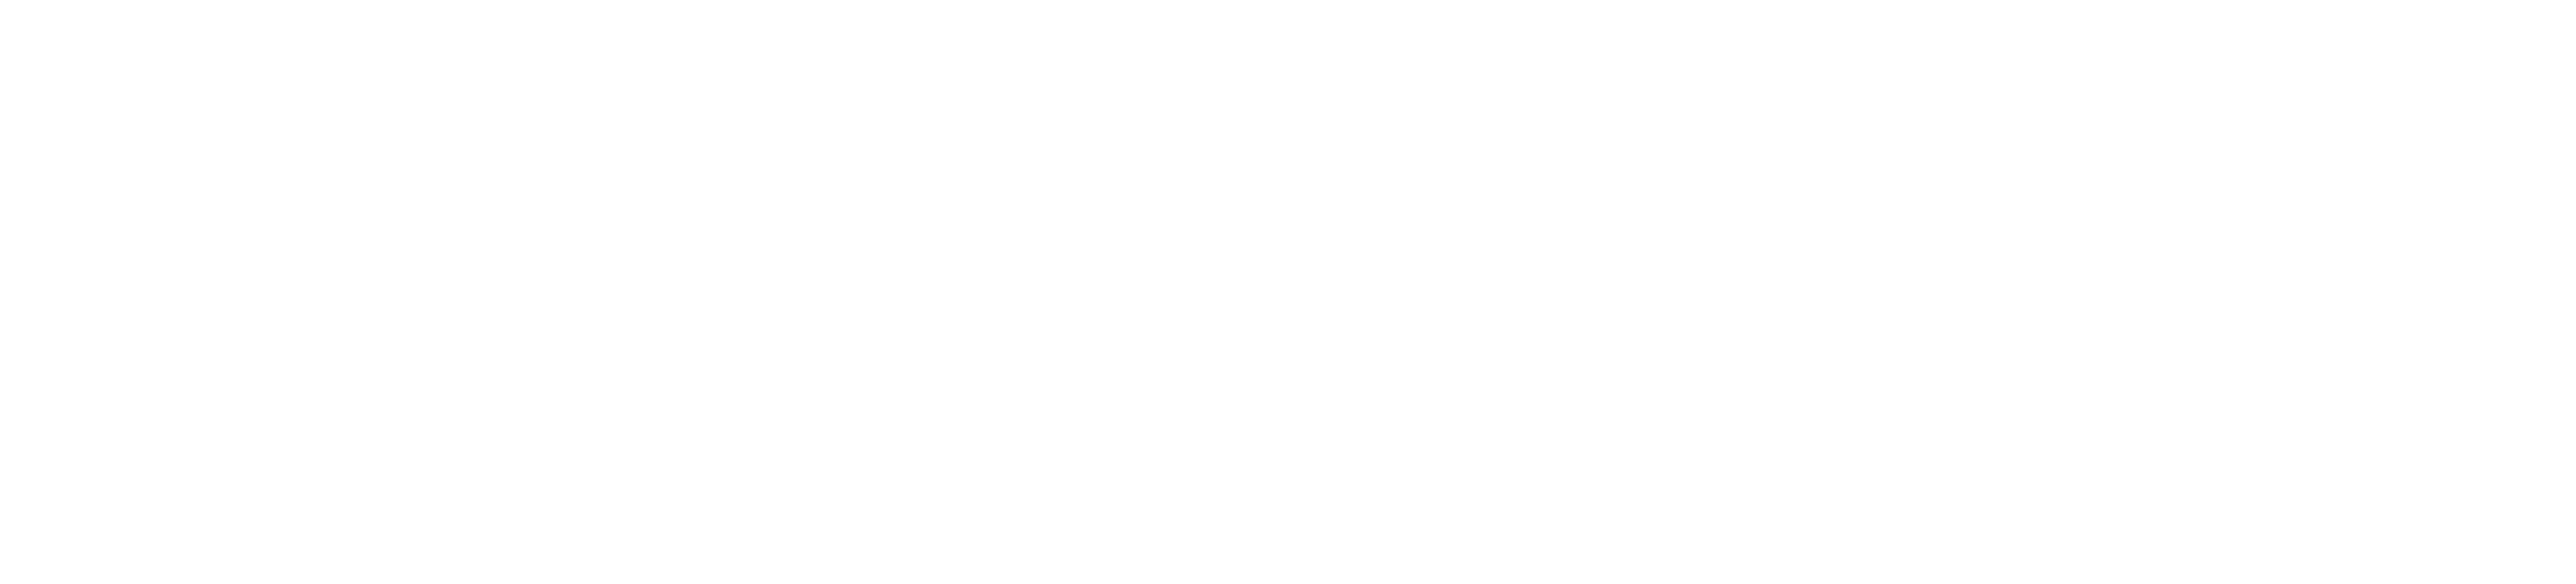 West Point Care Center